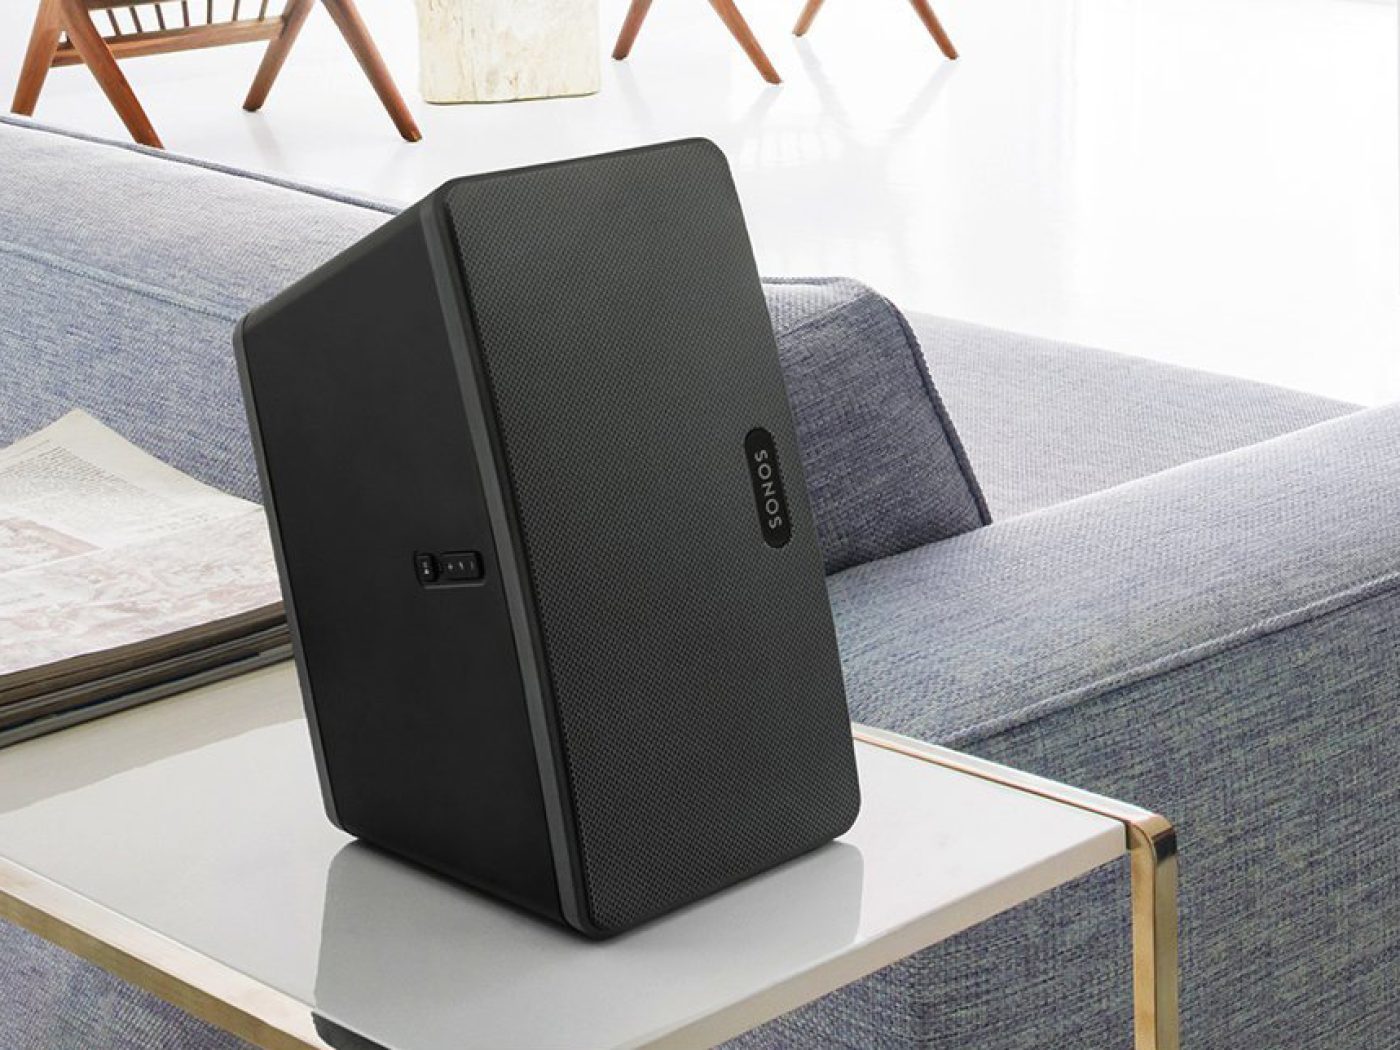 Sonos finally making a smart speaker to beat the Amazon Echo